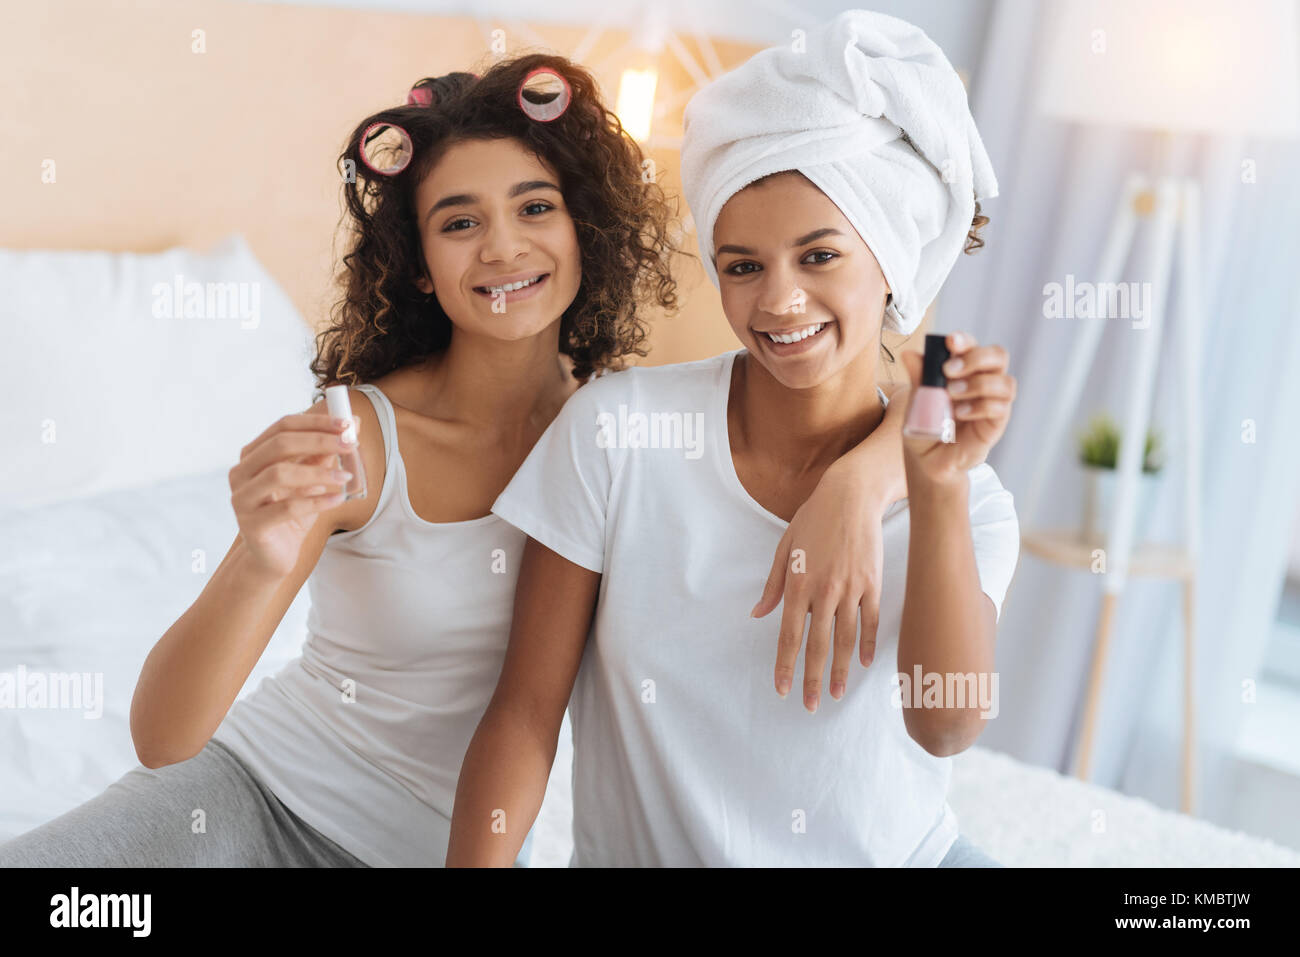 Stylish girls posing with nail polishes at home Stock Photo